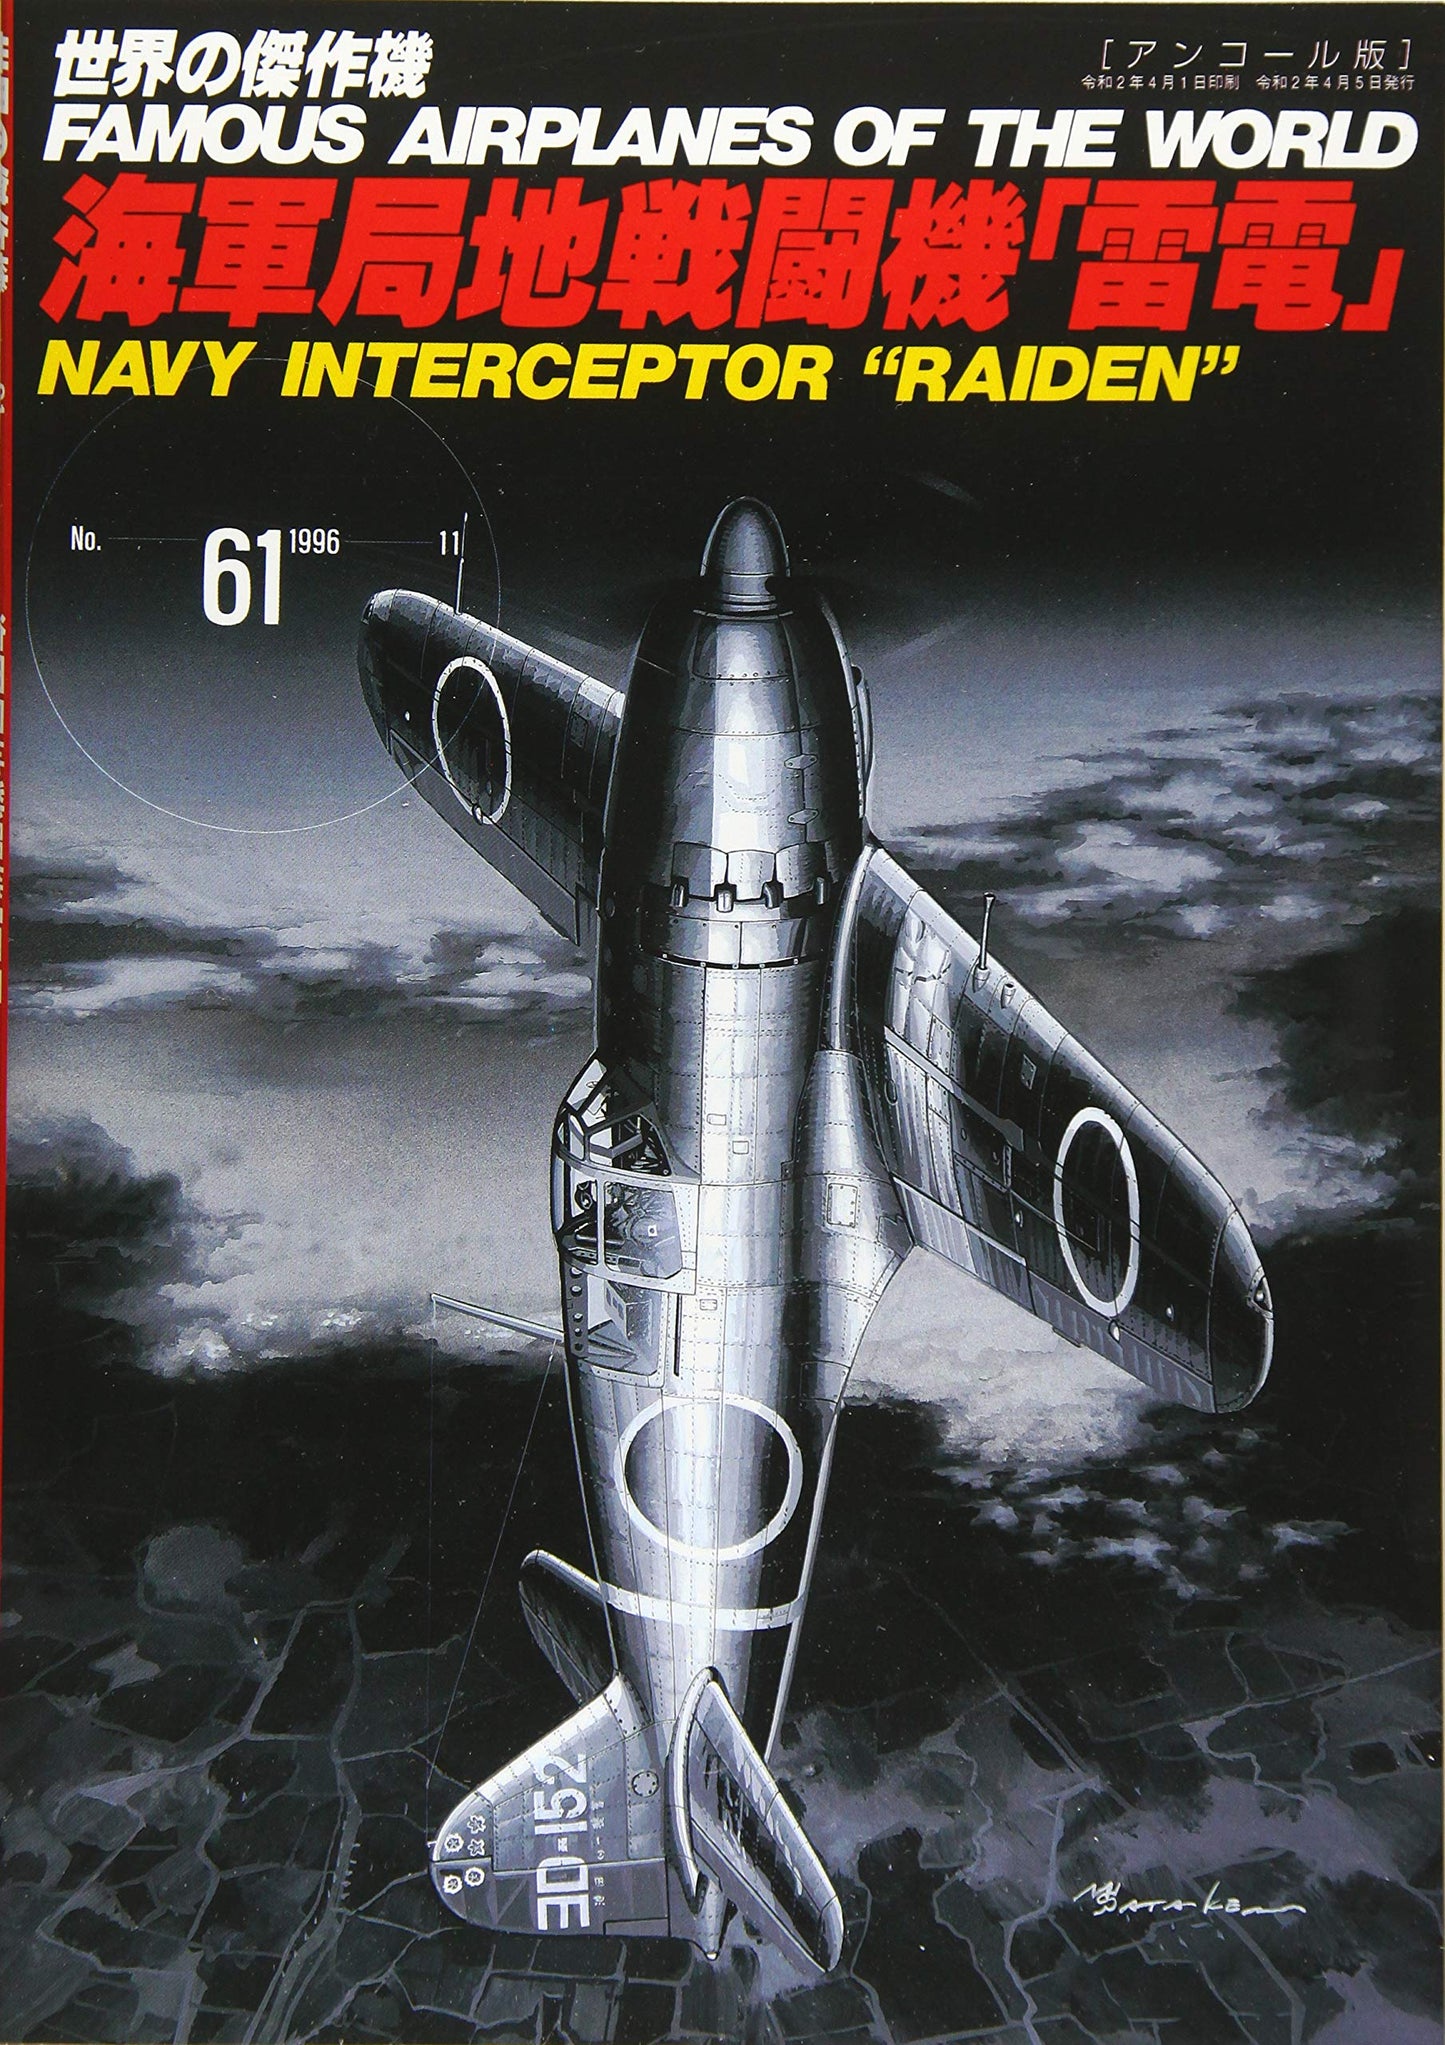 Navy Interceptor RAIDEN / Famous Airplanes of The World No.61